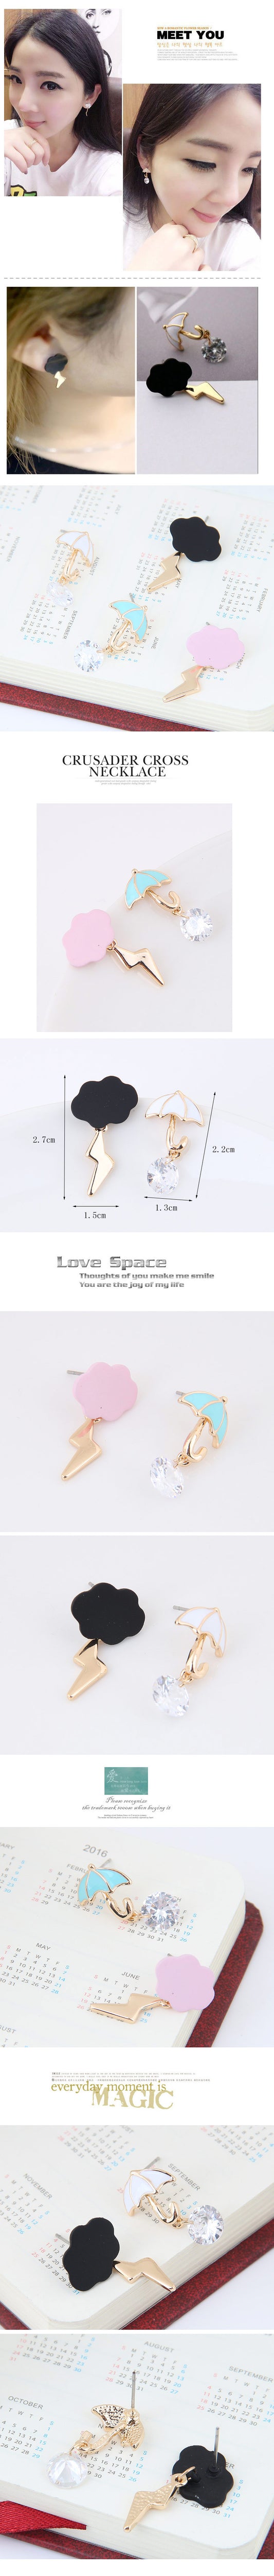 Korean Fashion Sweet Ol Cloud Umbrella Zircon Asymmetric Earrings Yiwu Nihaojewelry Wholesale